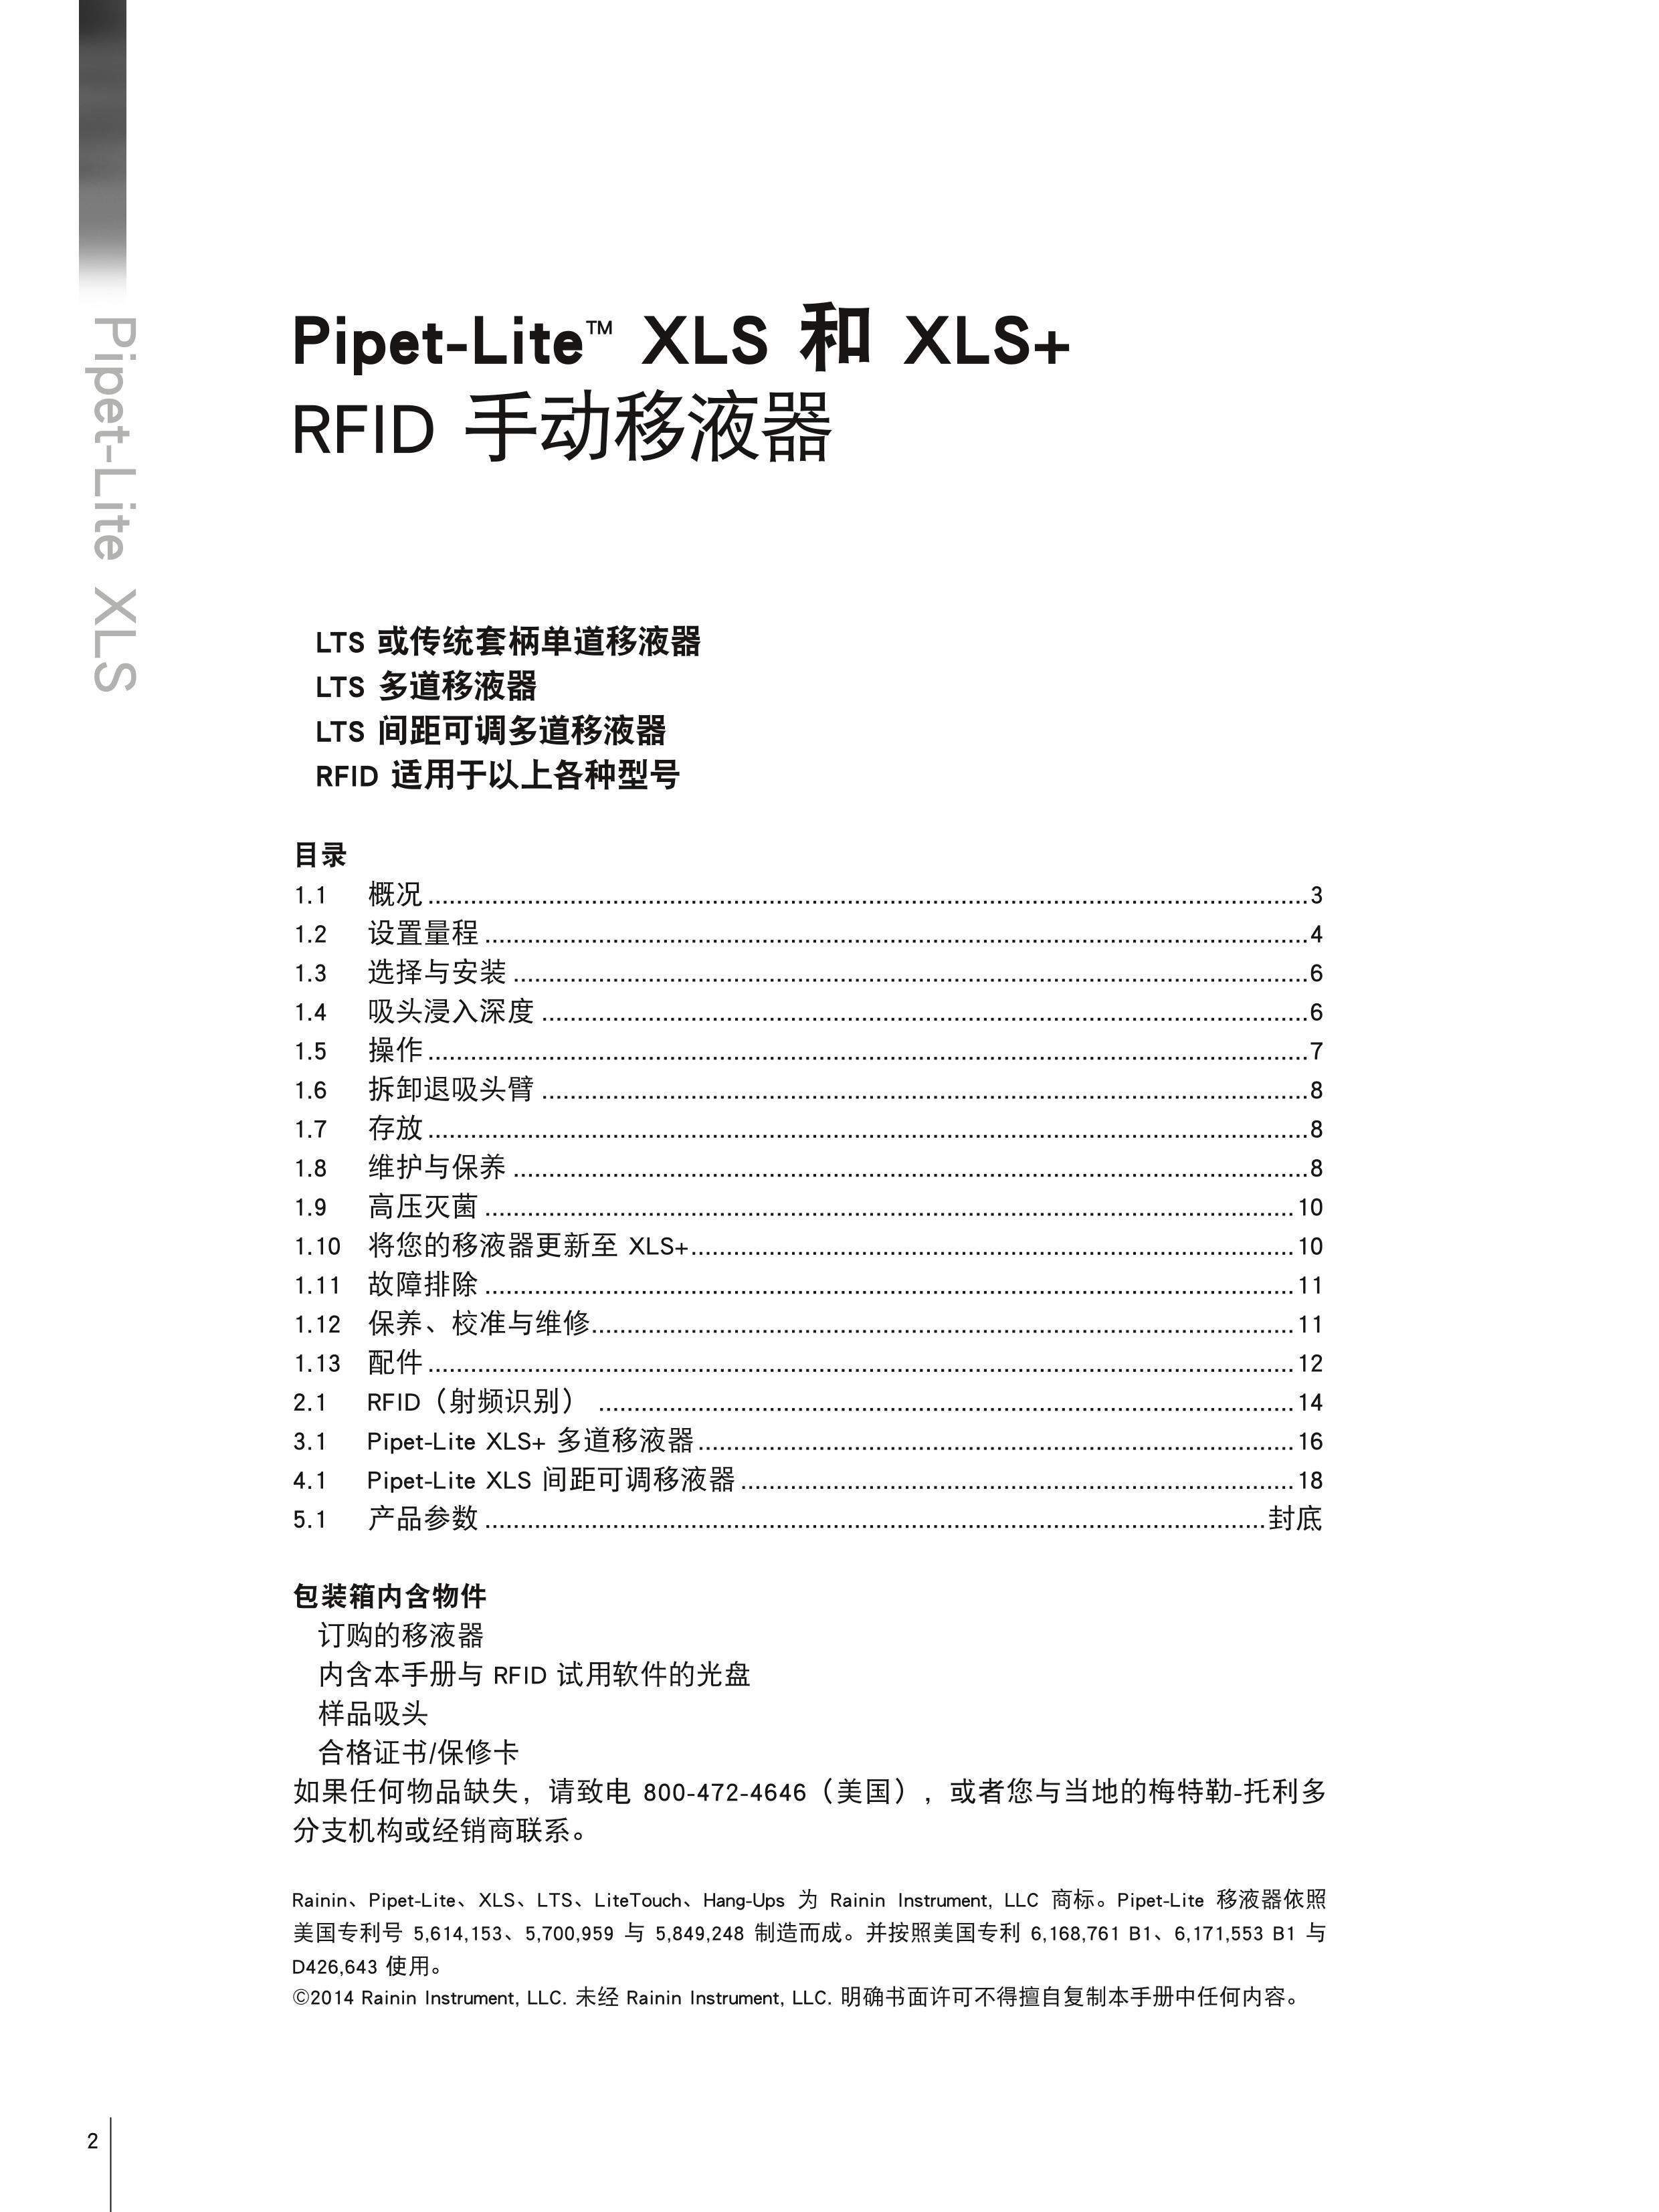 Pipet-Lite XLS+ RFIDֶҺ˵2ҳ